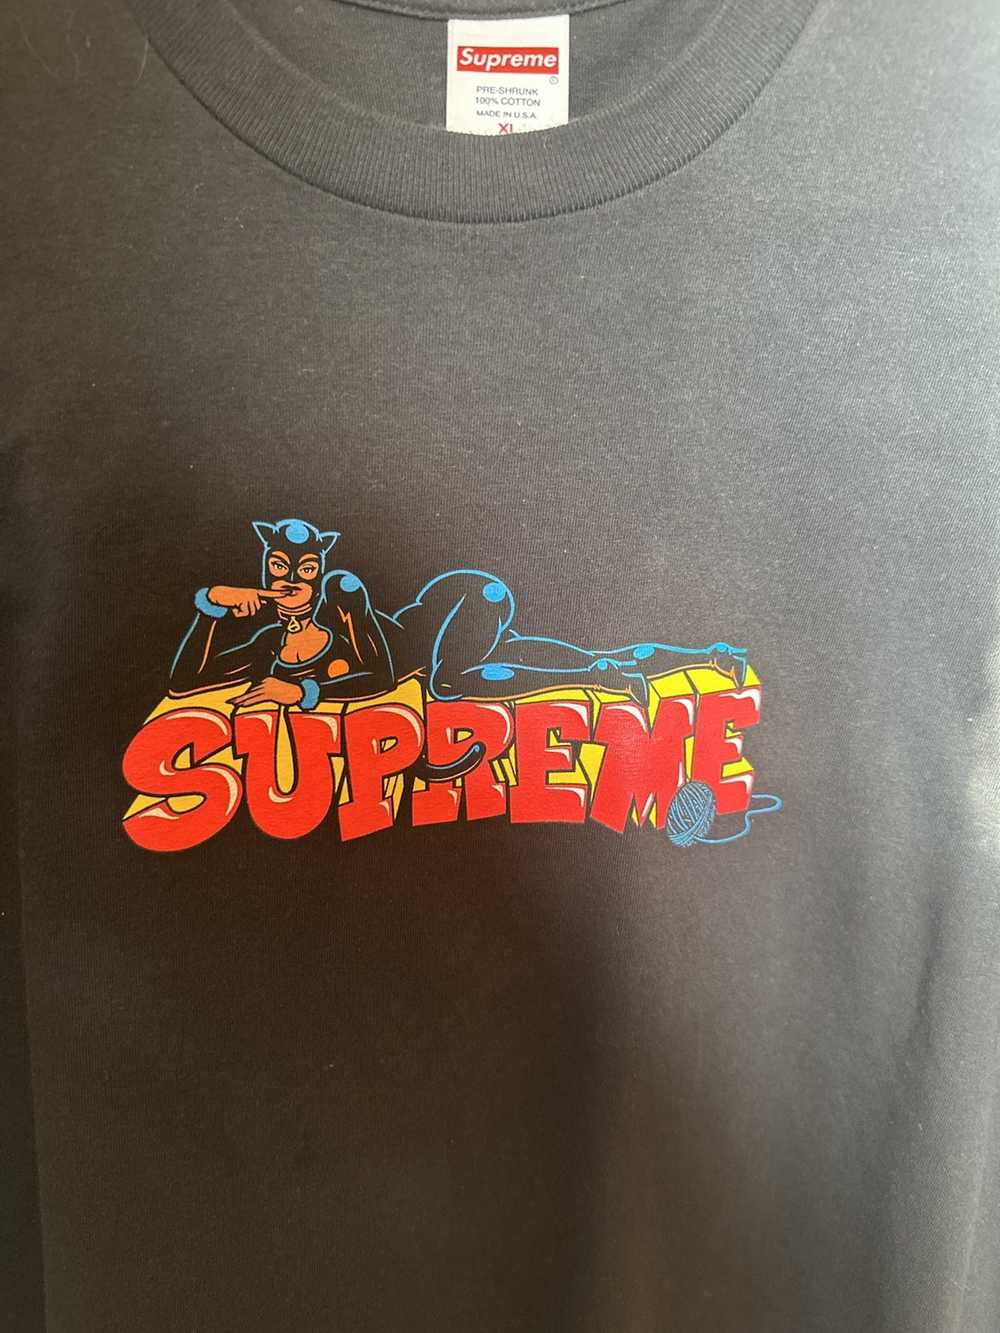 Supreme Supreme t shirt Cat women - image 1